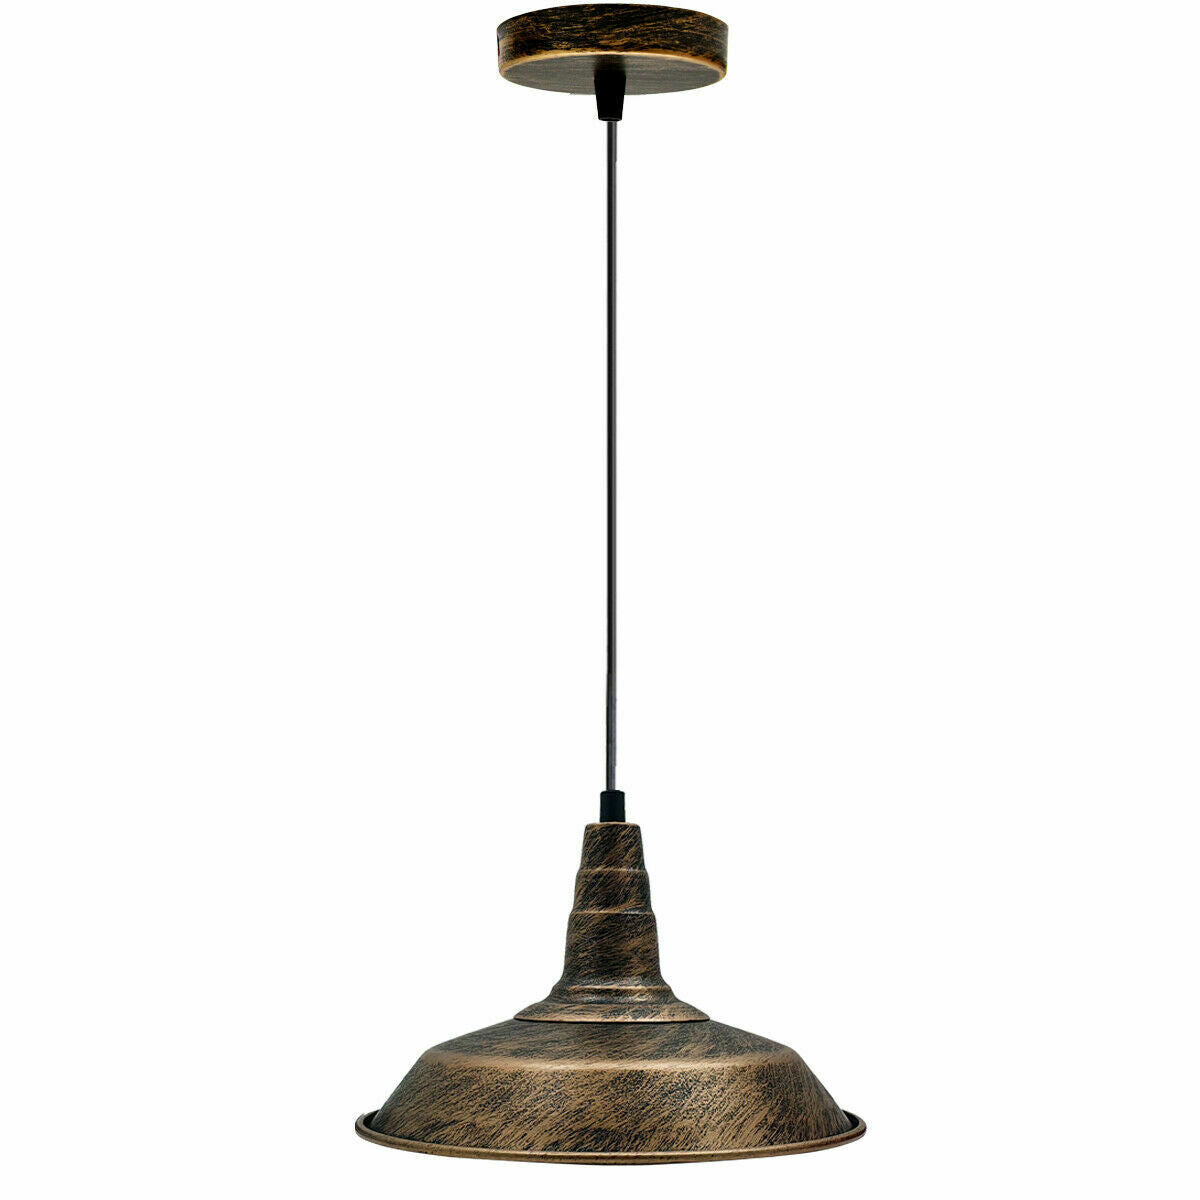 Industrial Vintage New Pendant Ceiling Light 26cm Bowl Shade Brushed Copper E27Uk Holder~3726 - LEDSone UK Ltd